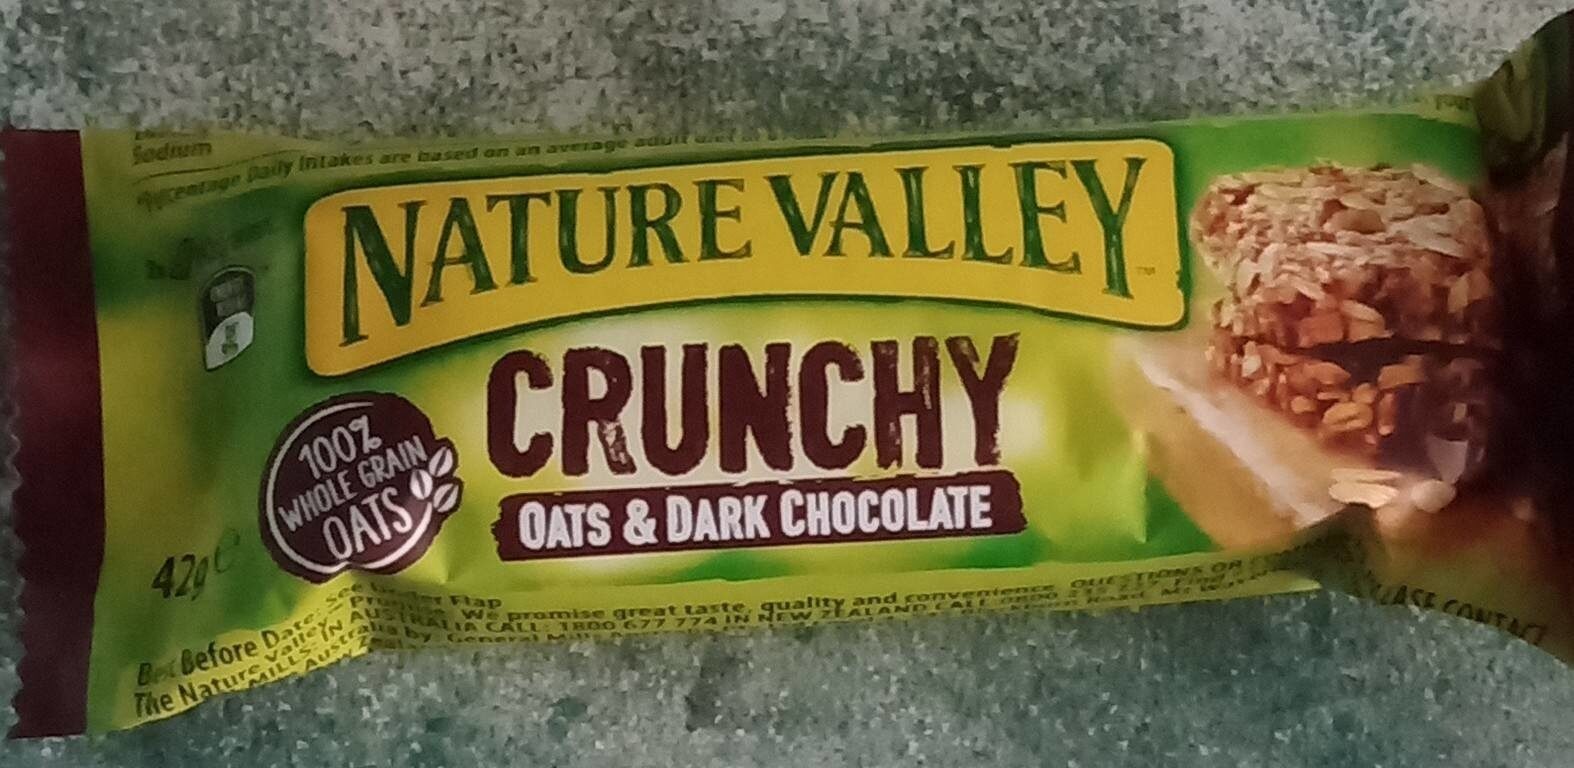 Crunchy museli bar - Product